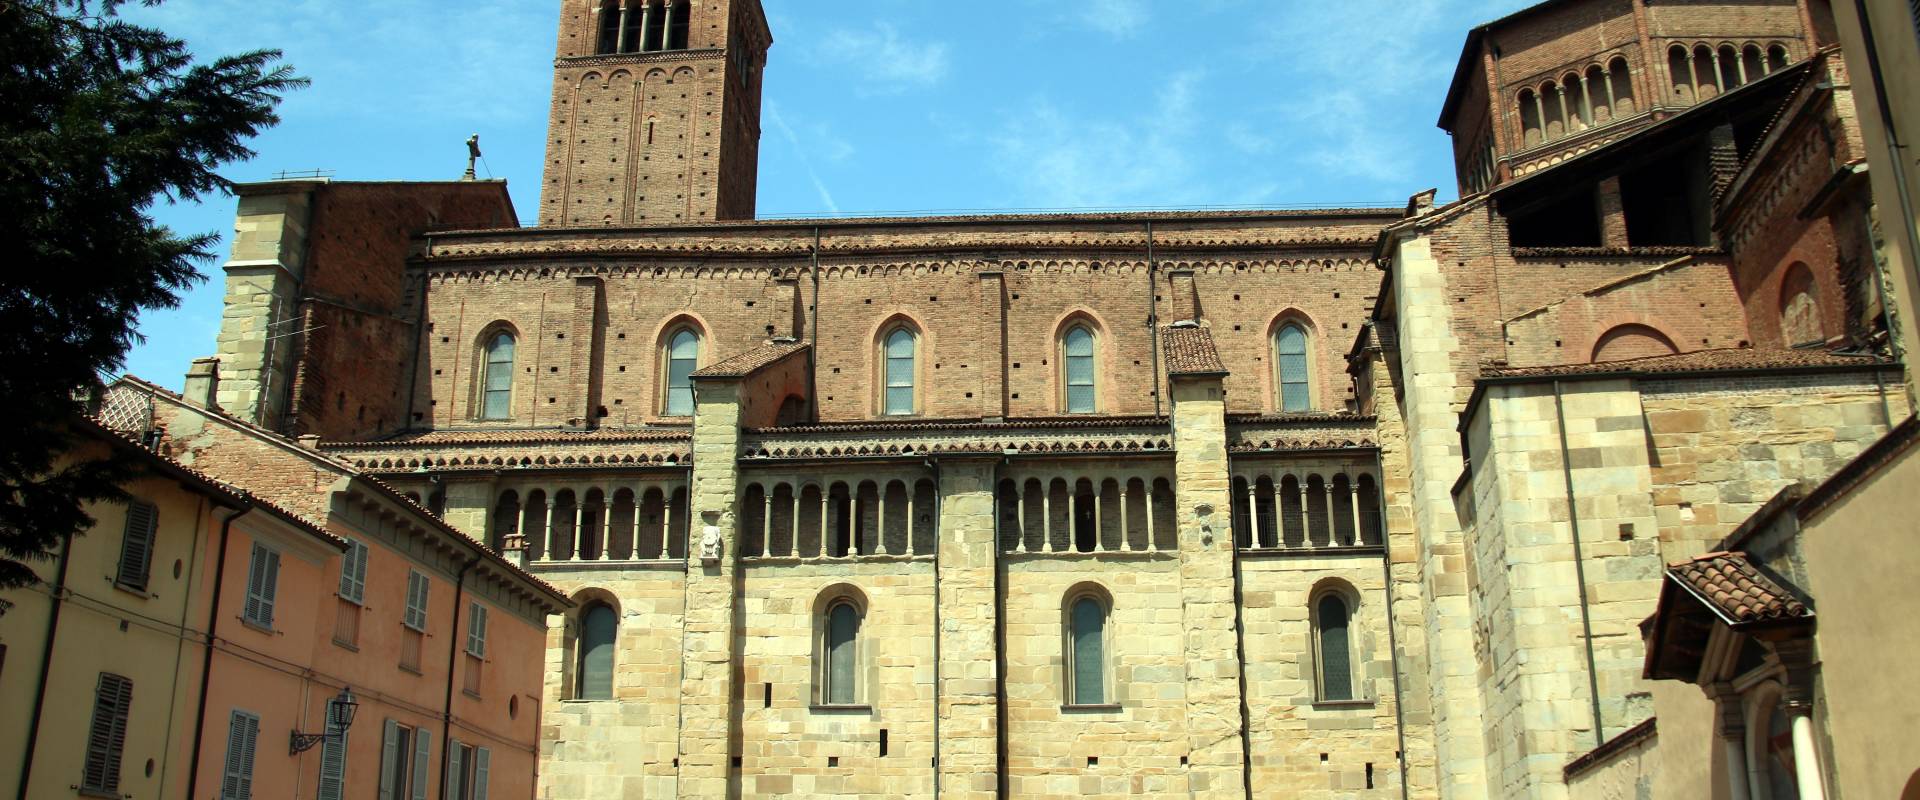 Duomo (Piacenza) 01 photo by Mongolo1984